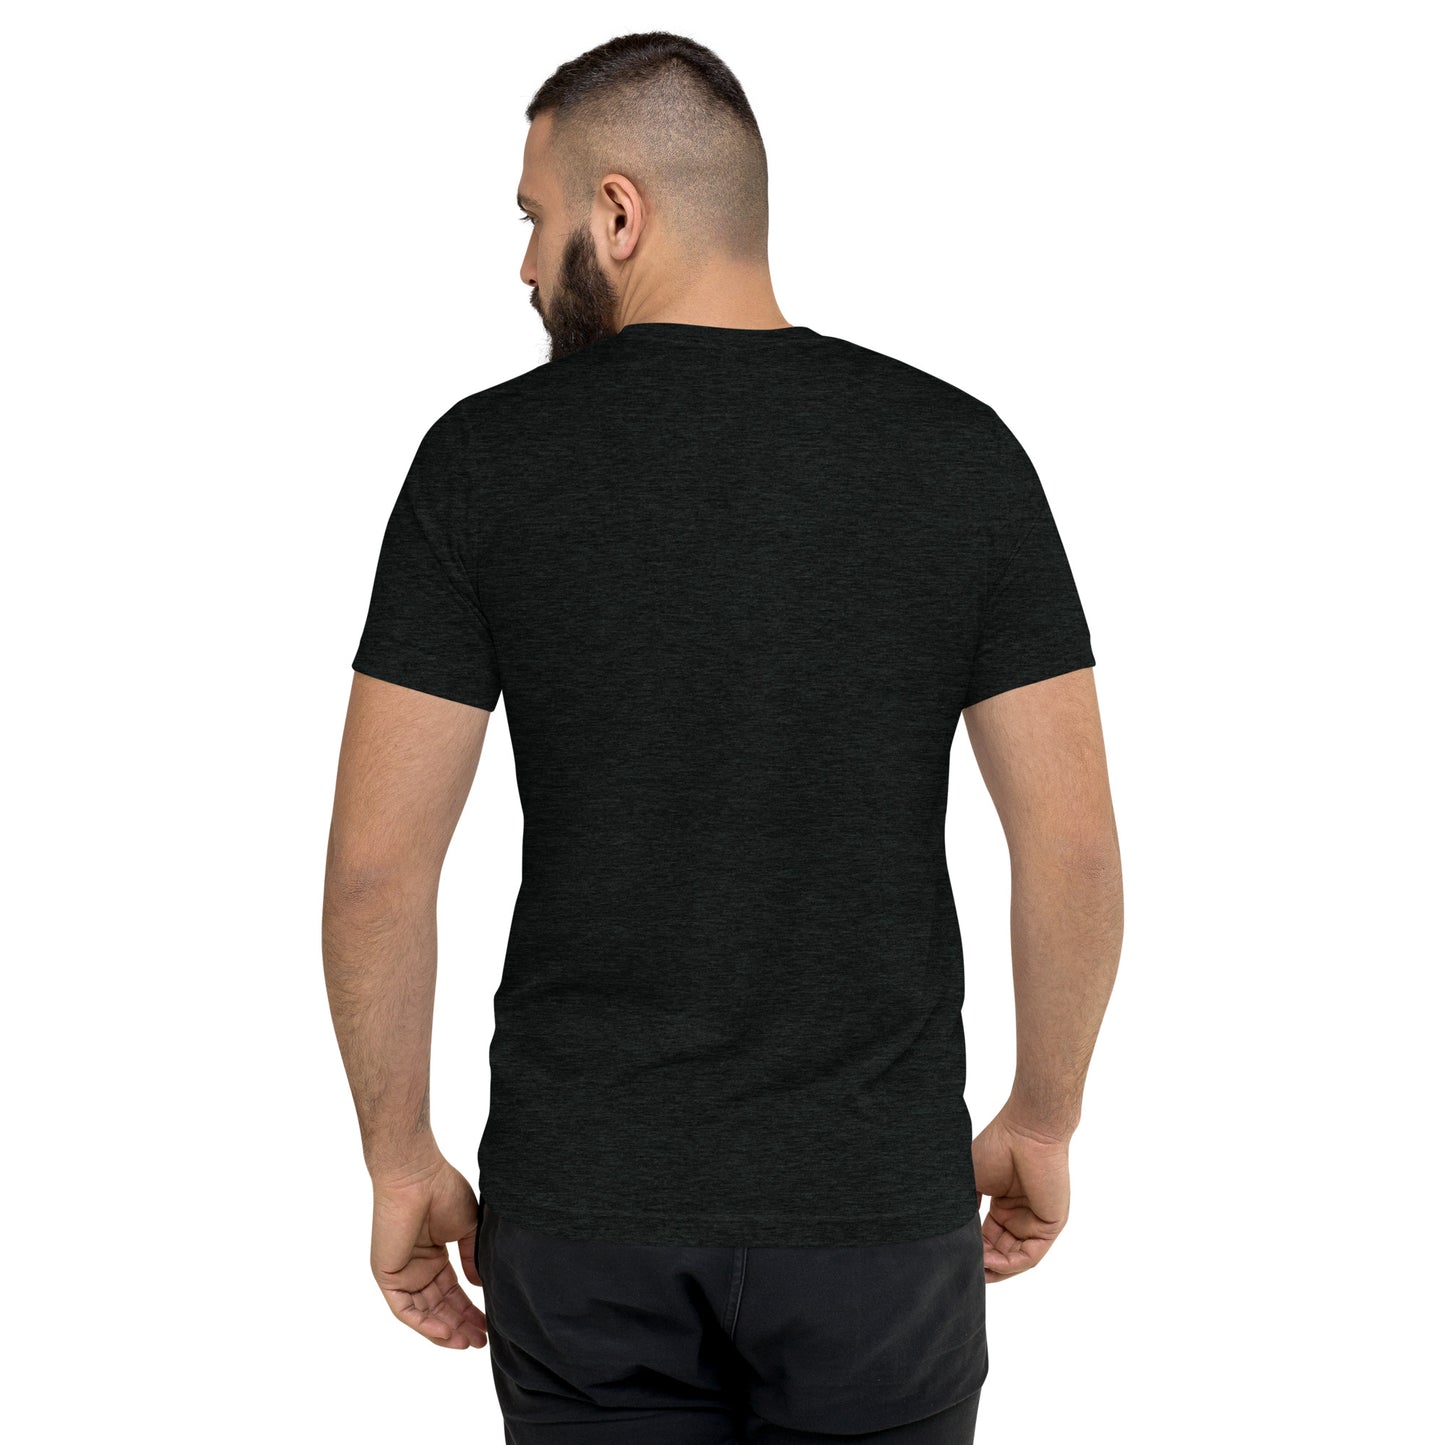 504 New Orleans Short Sleeve Tri-Blend T-Shirt